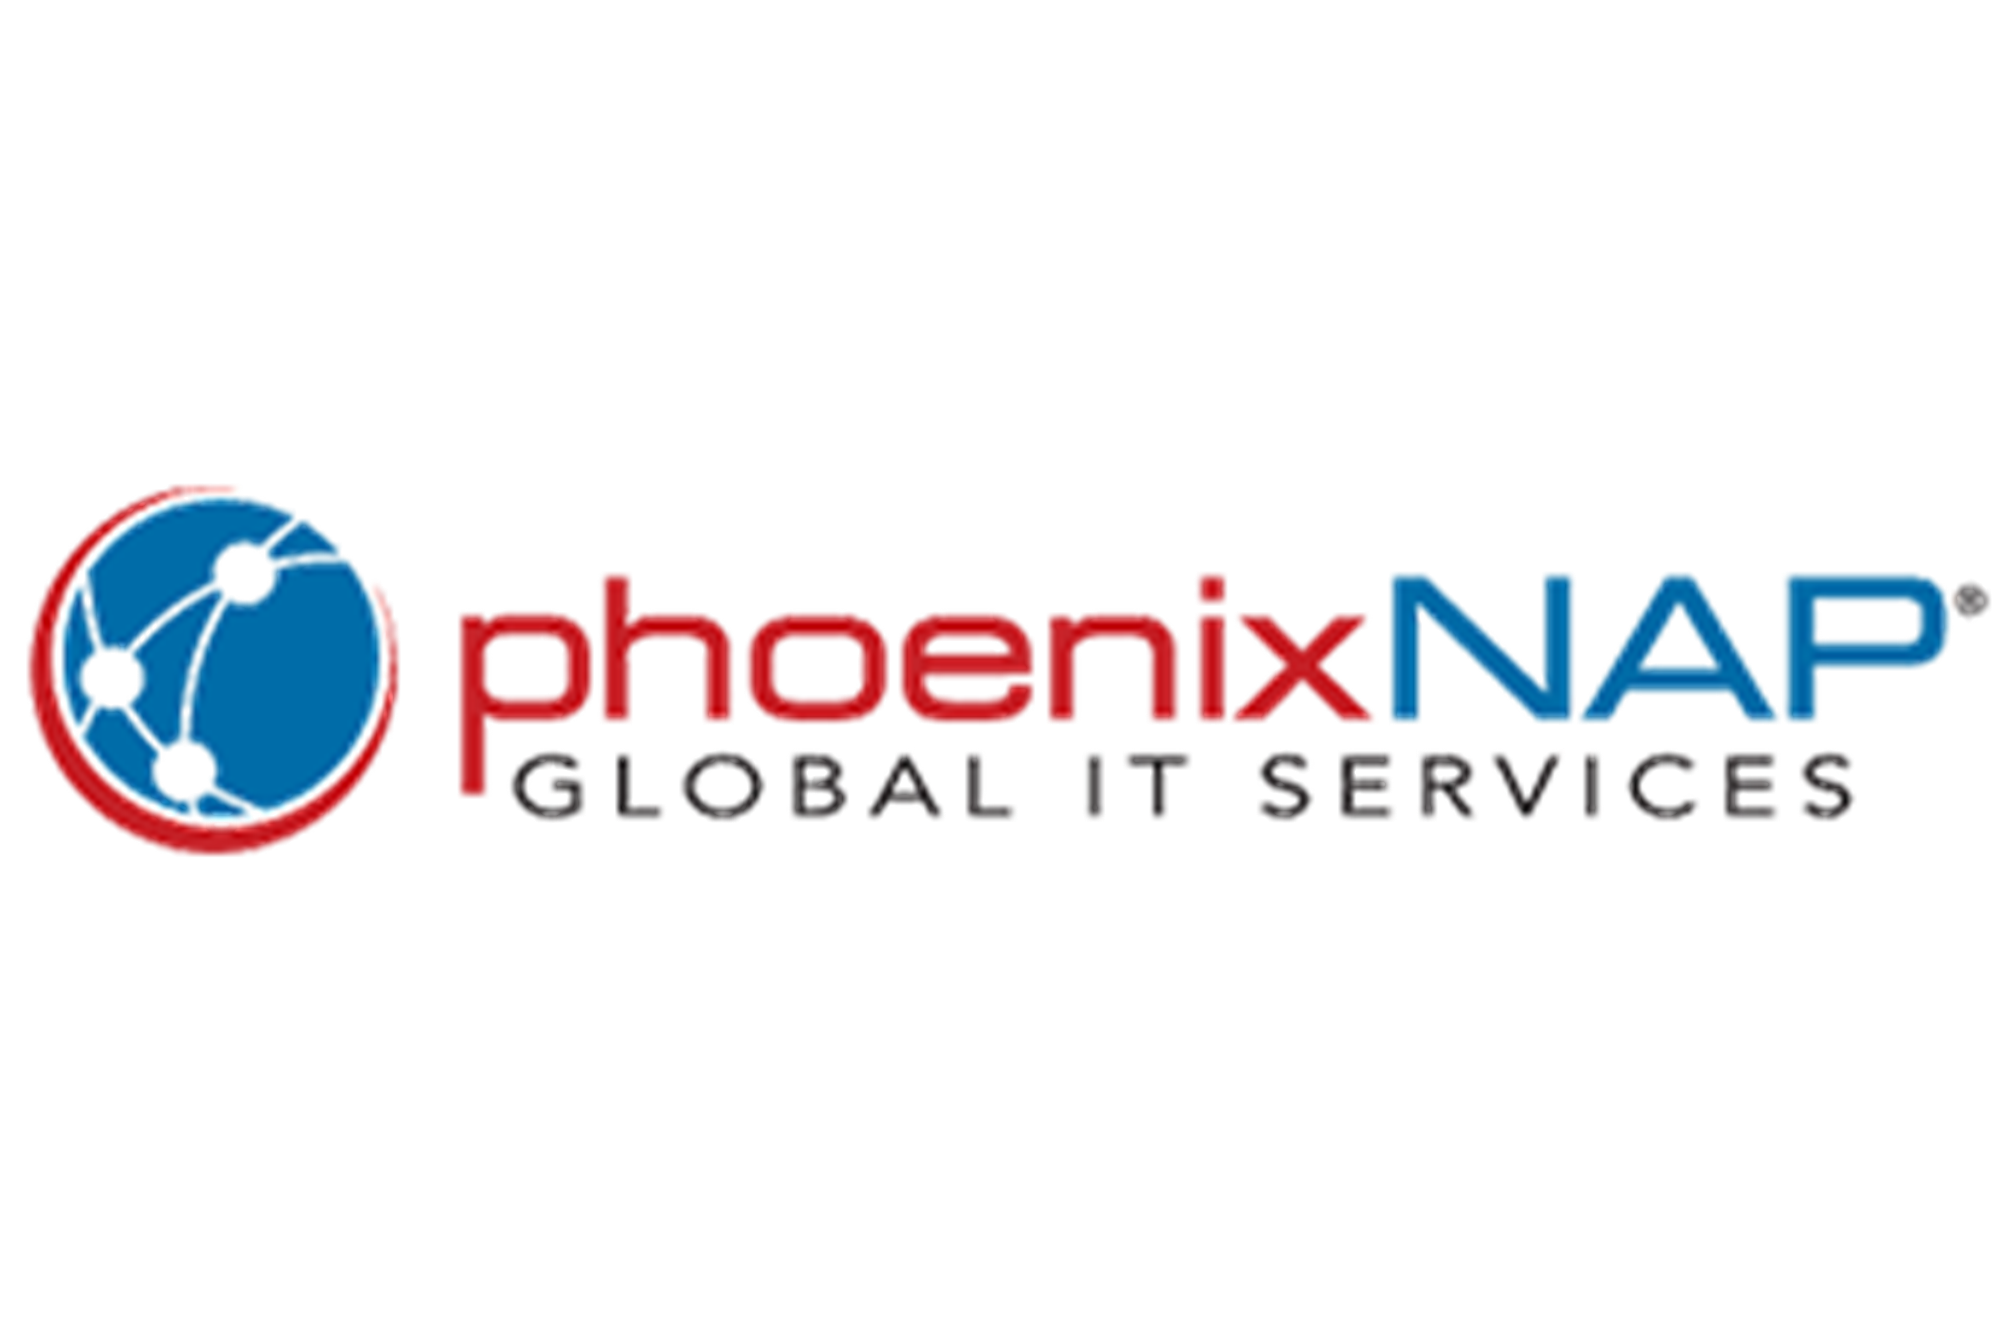 phoenix-nap-logo-343px.png